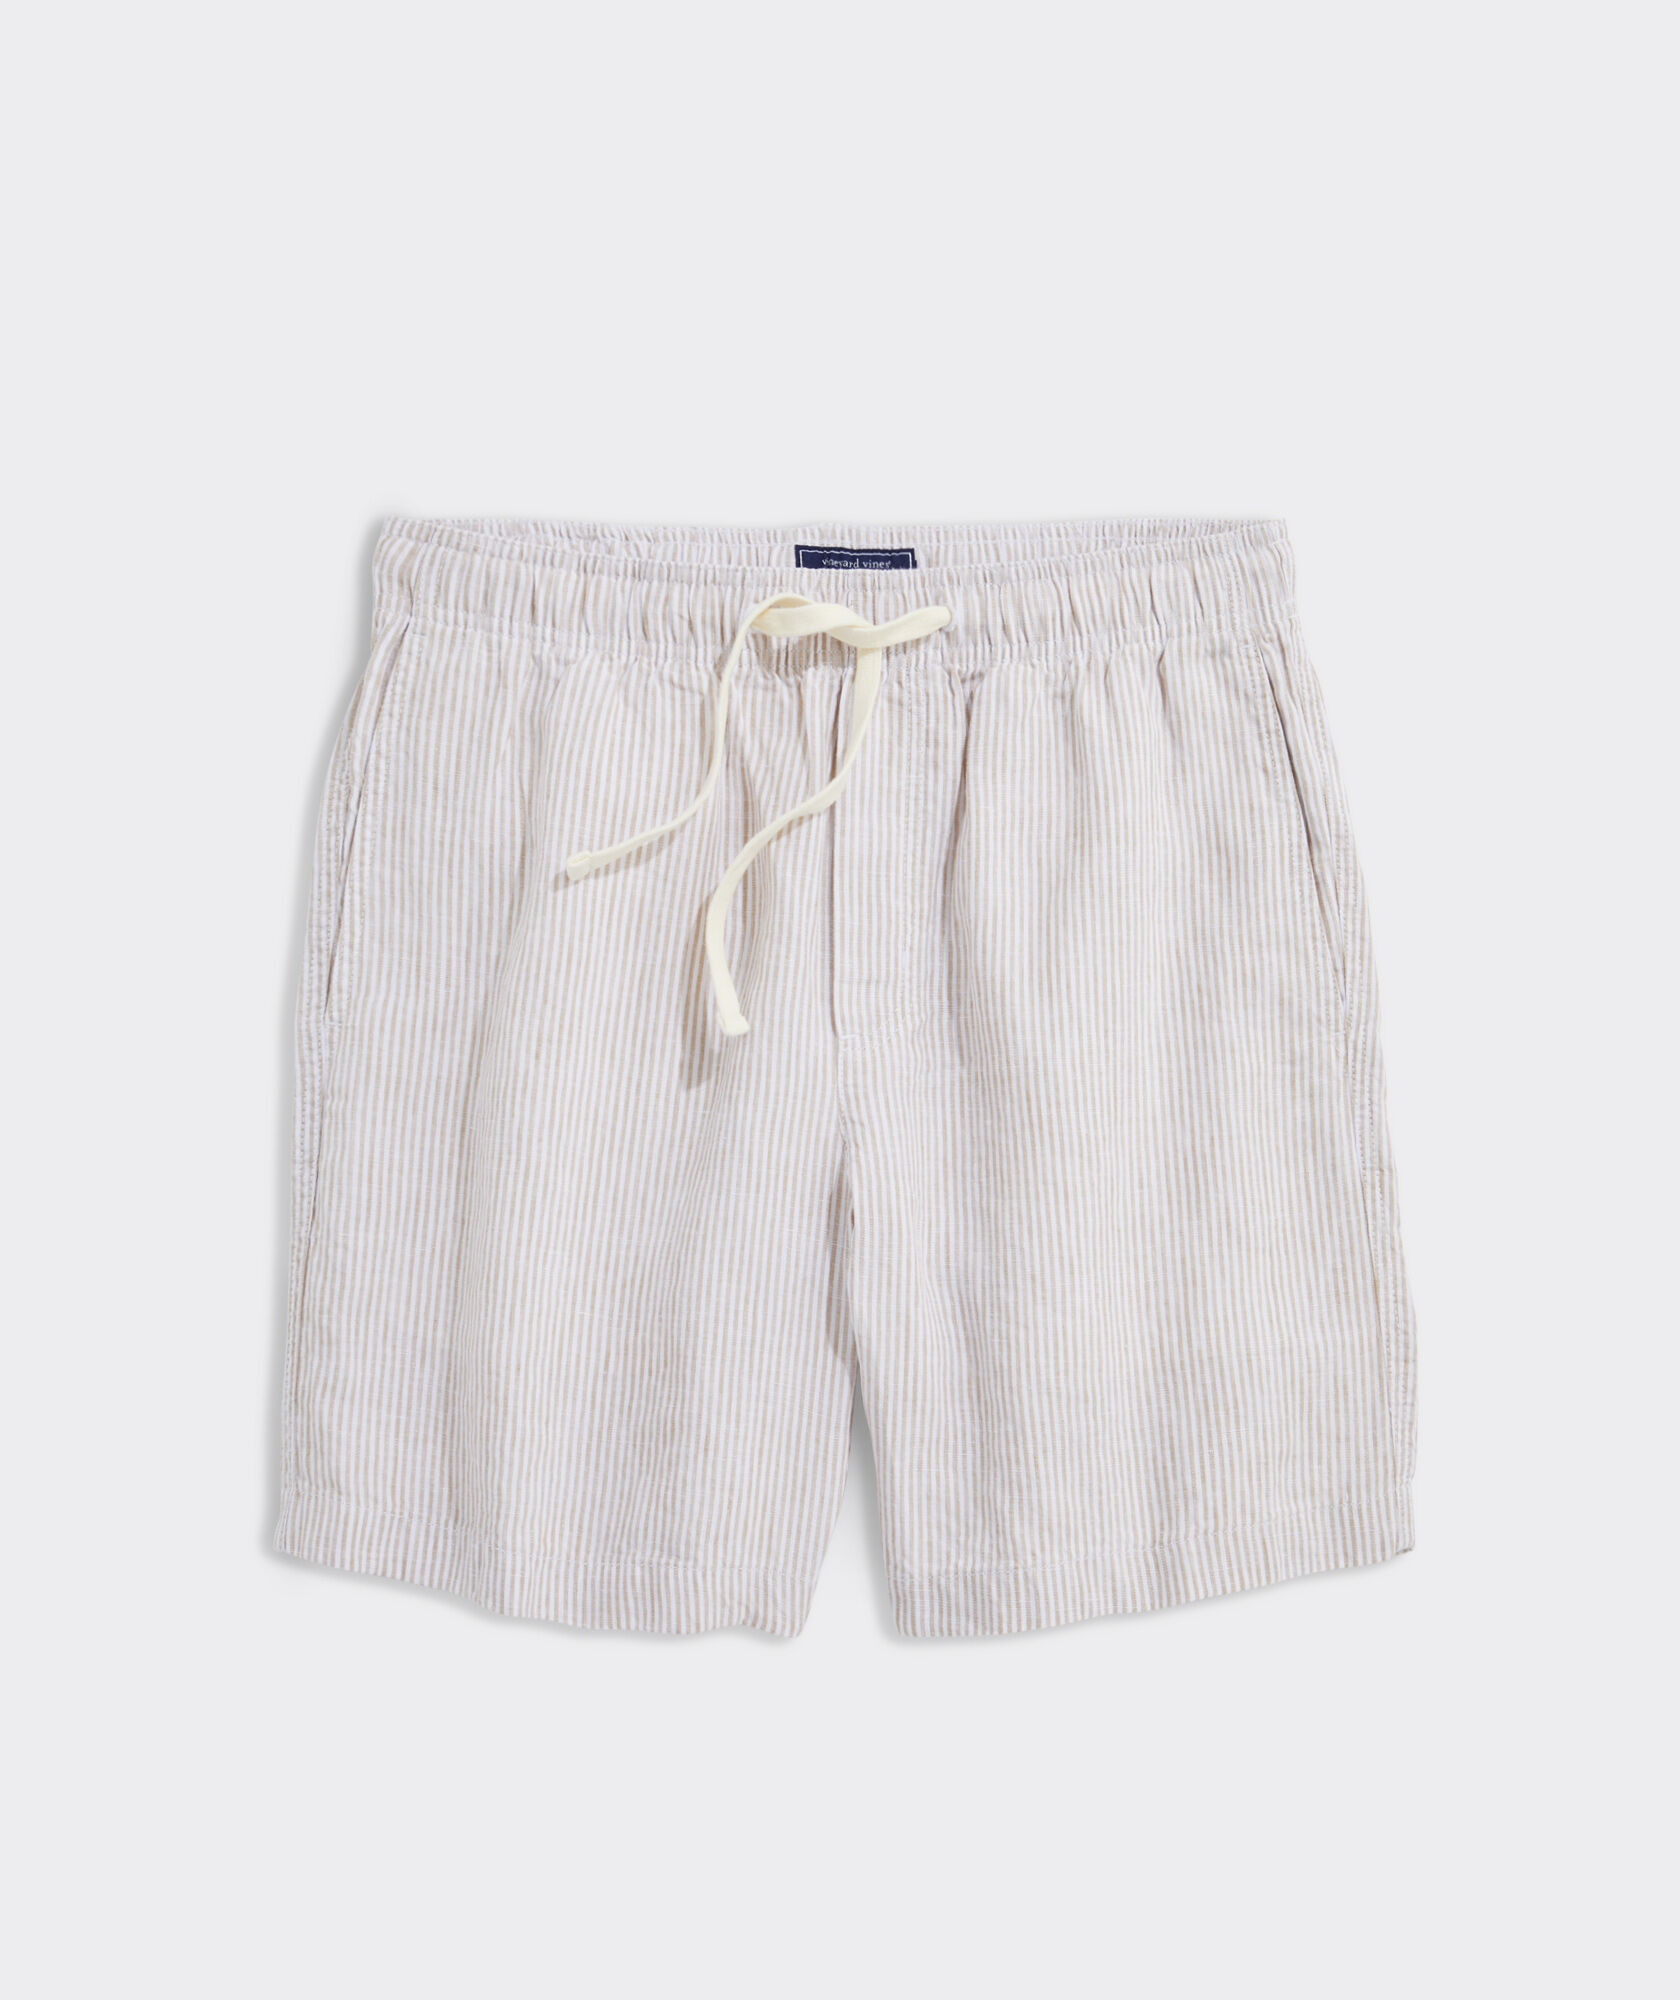 Grand Le Mar  Hay Linen Drawstring Shorts.